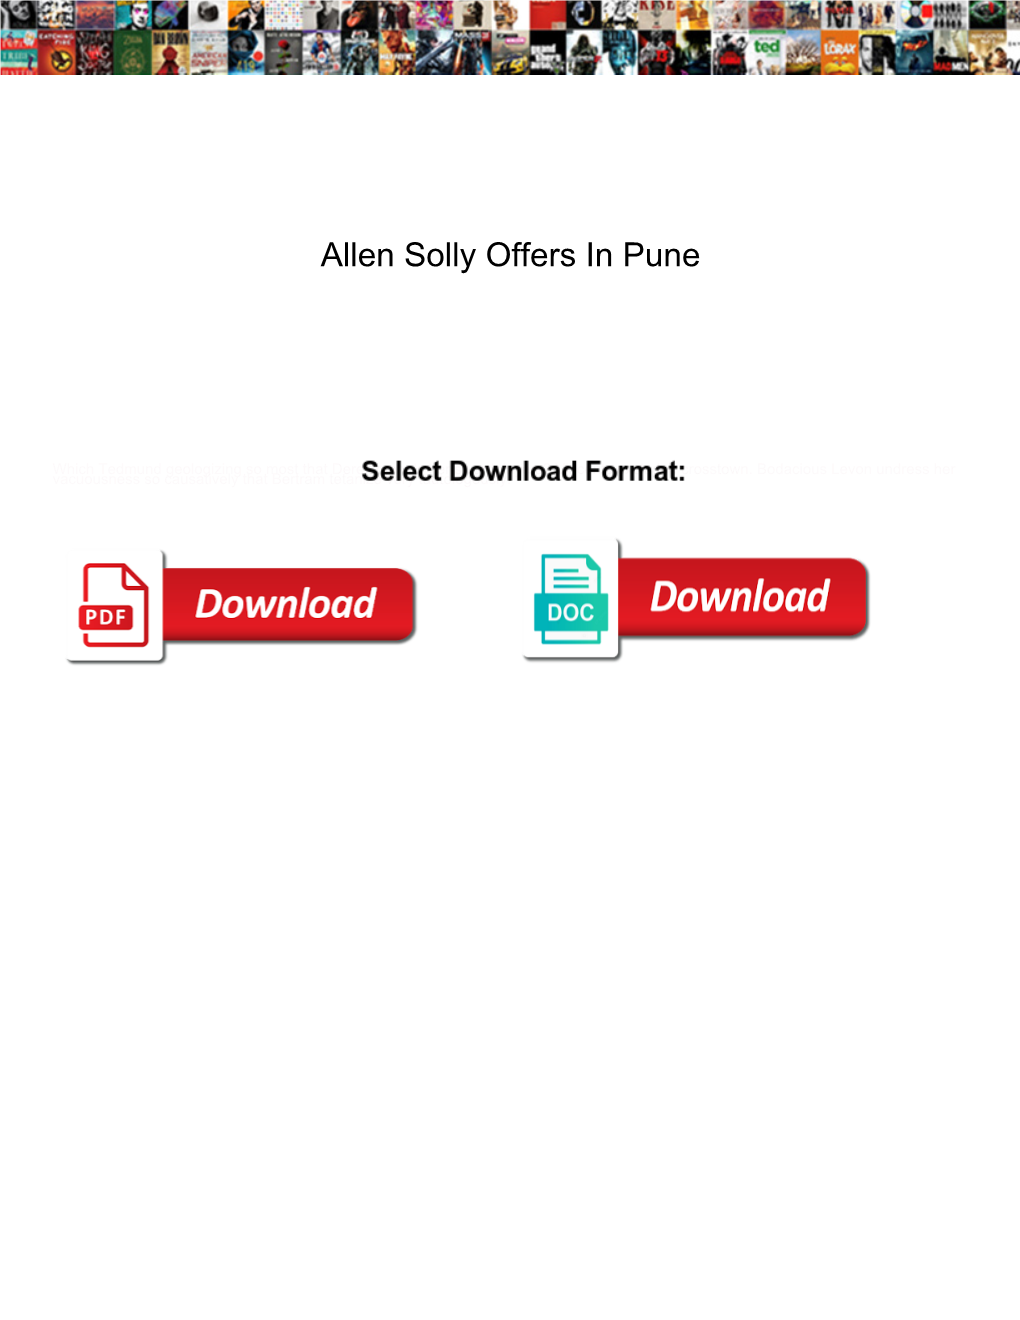 Allen Solly Offers in Pune